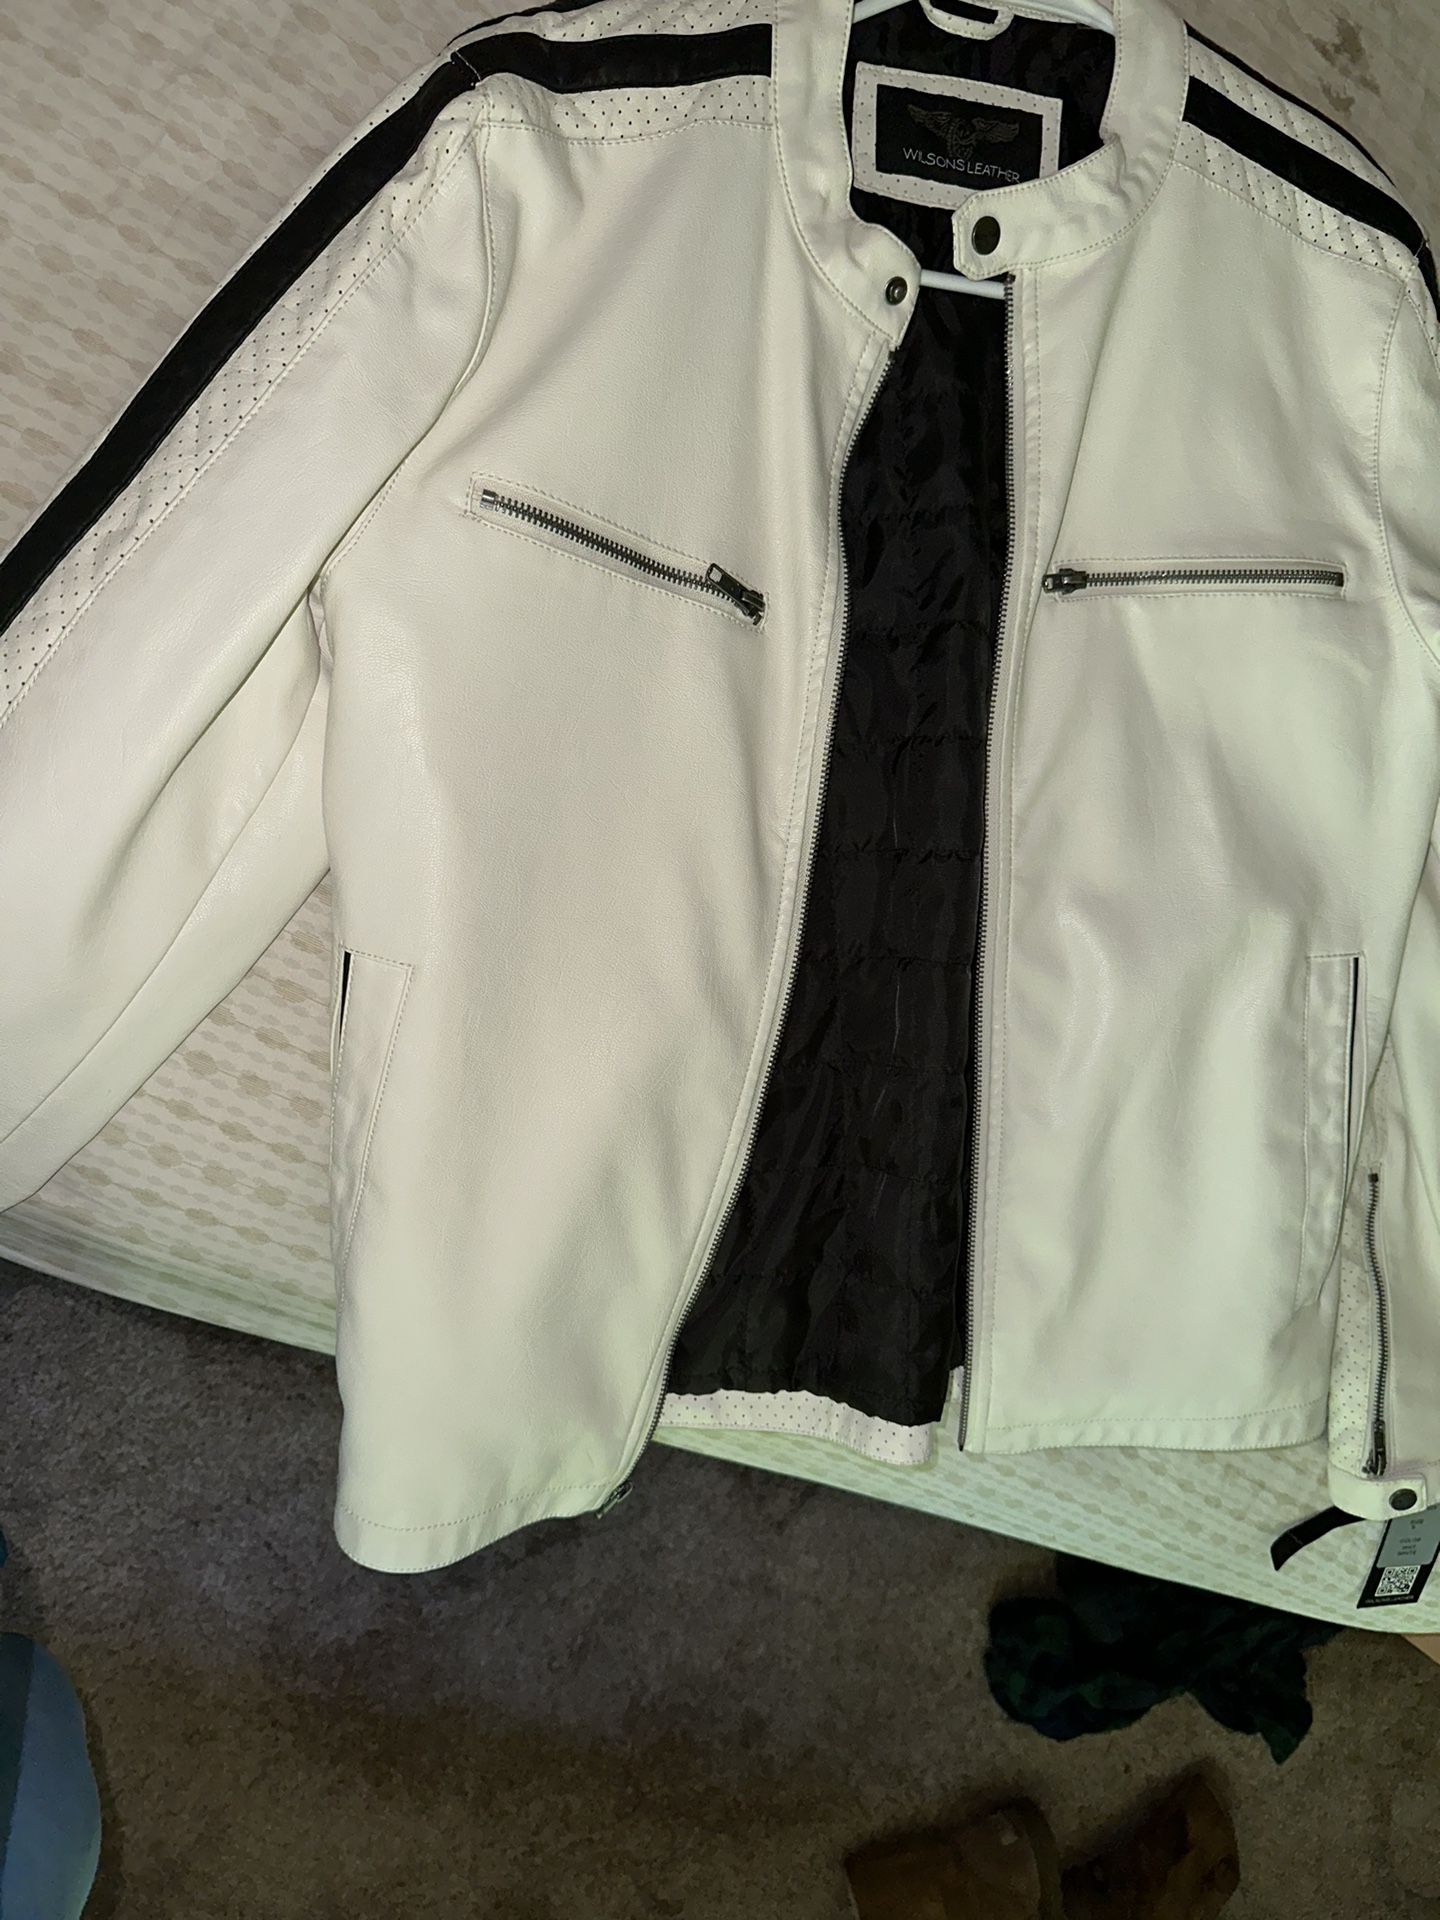 Wilson Leather Jacket